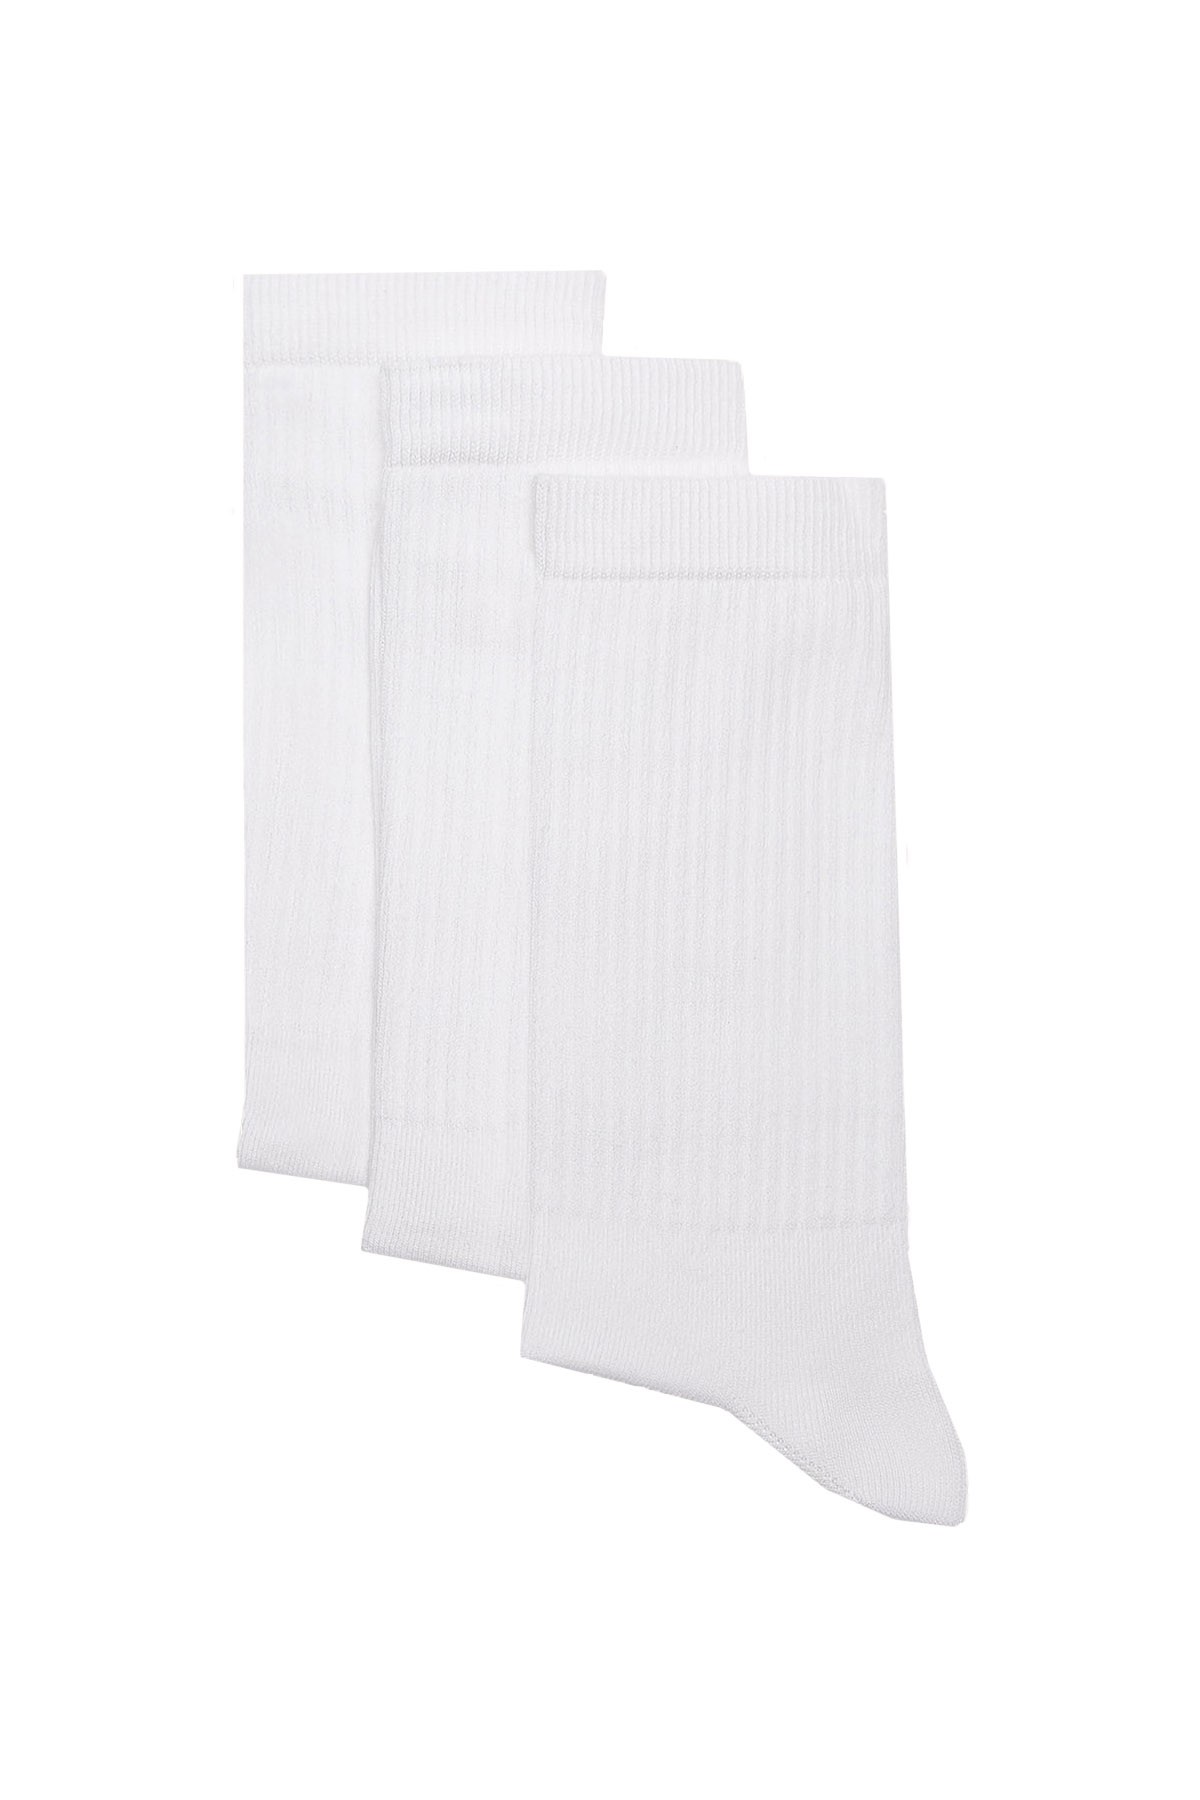 3 Pieces Sports Socks (36-44) - WHITE